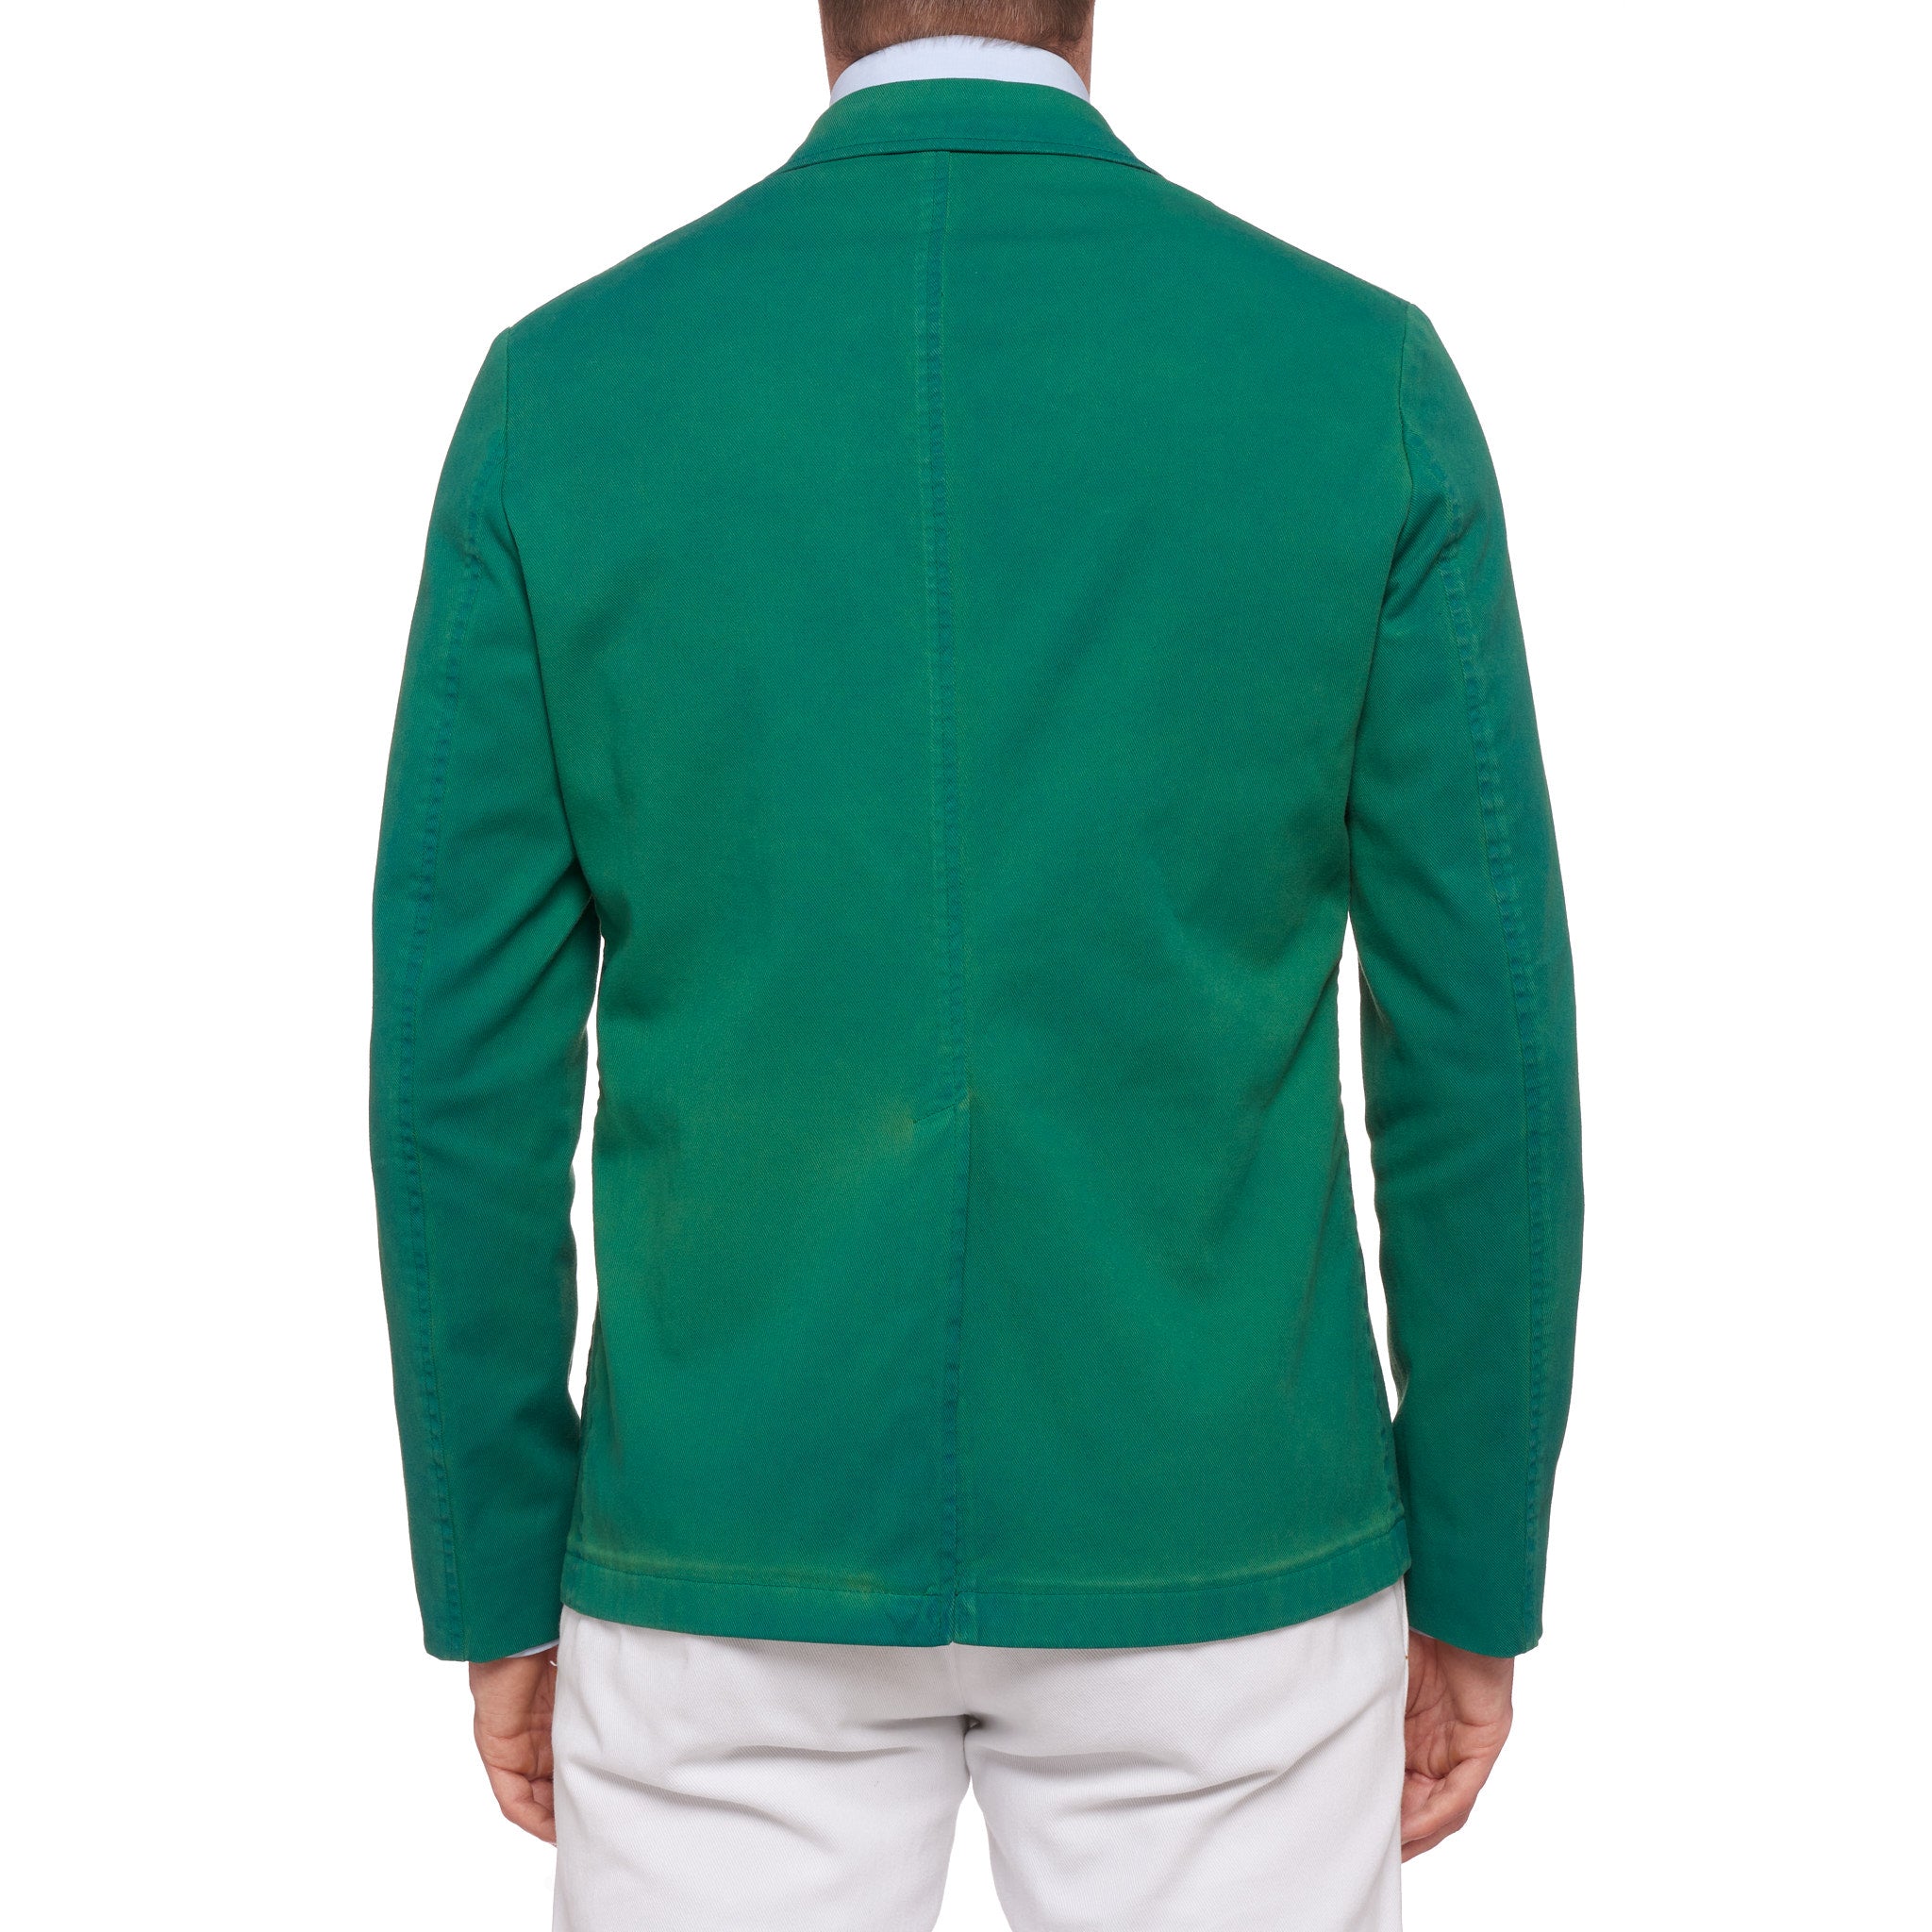 BOGLIOLI Galleria Green Garment Dyed Waxed Cotton 4 Button Jacket 50 NEW US 40 BOGLIOLI